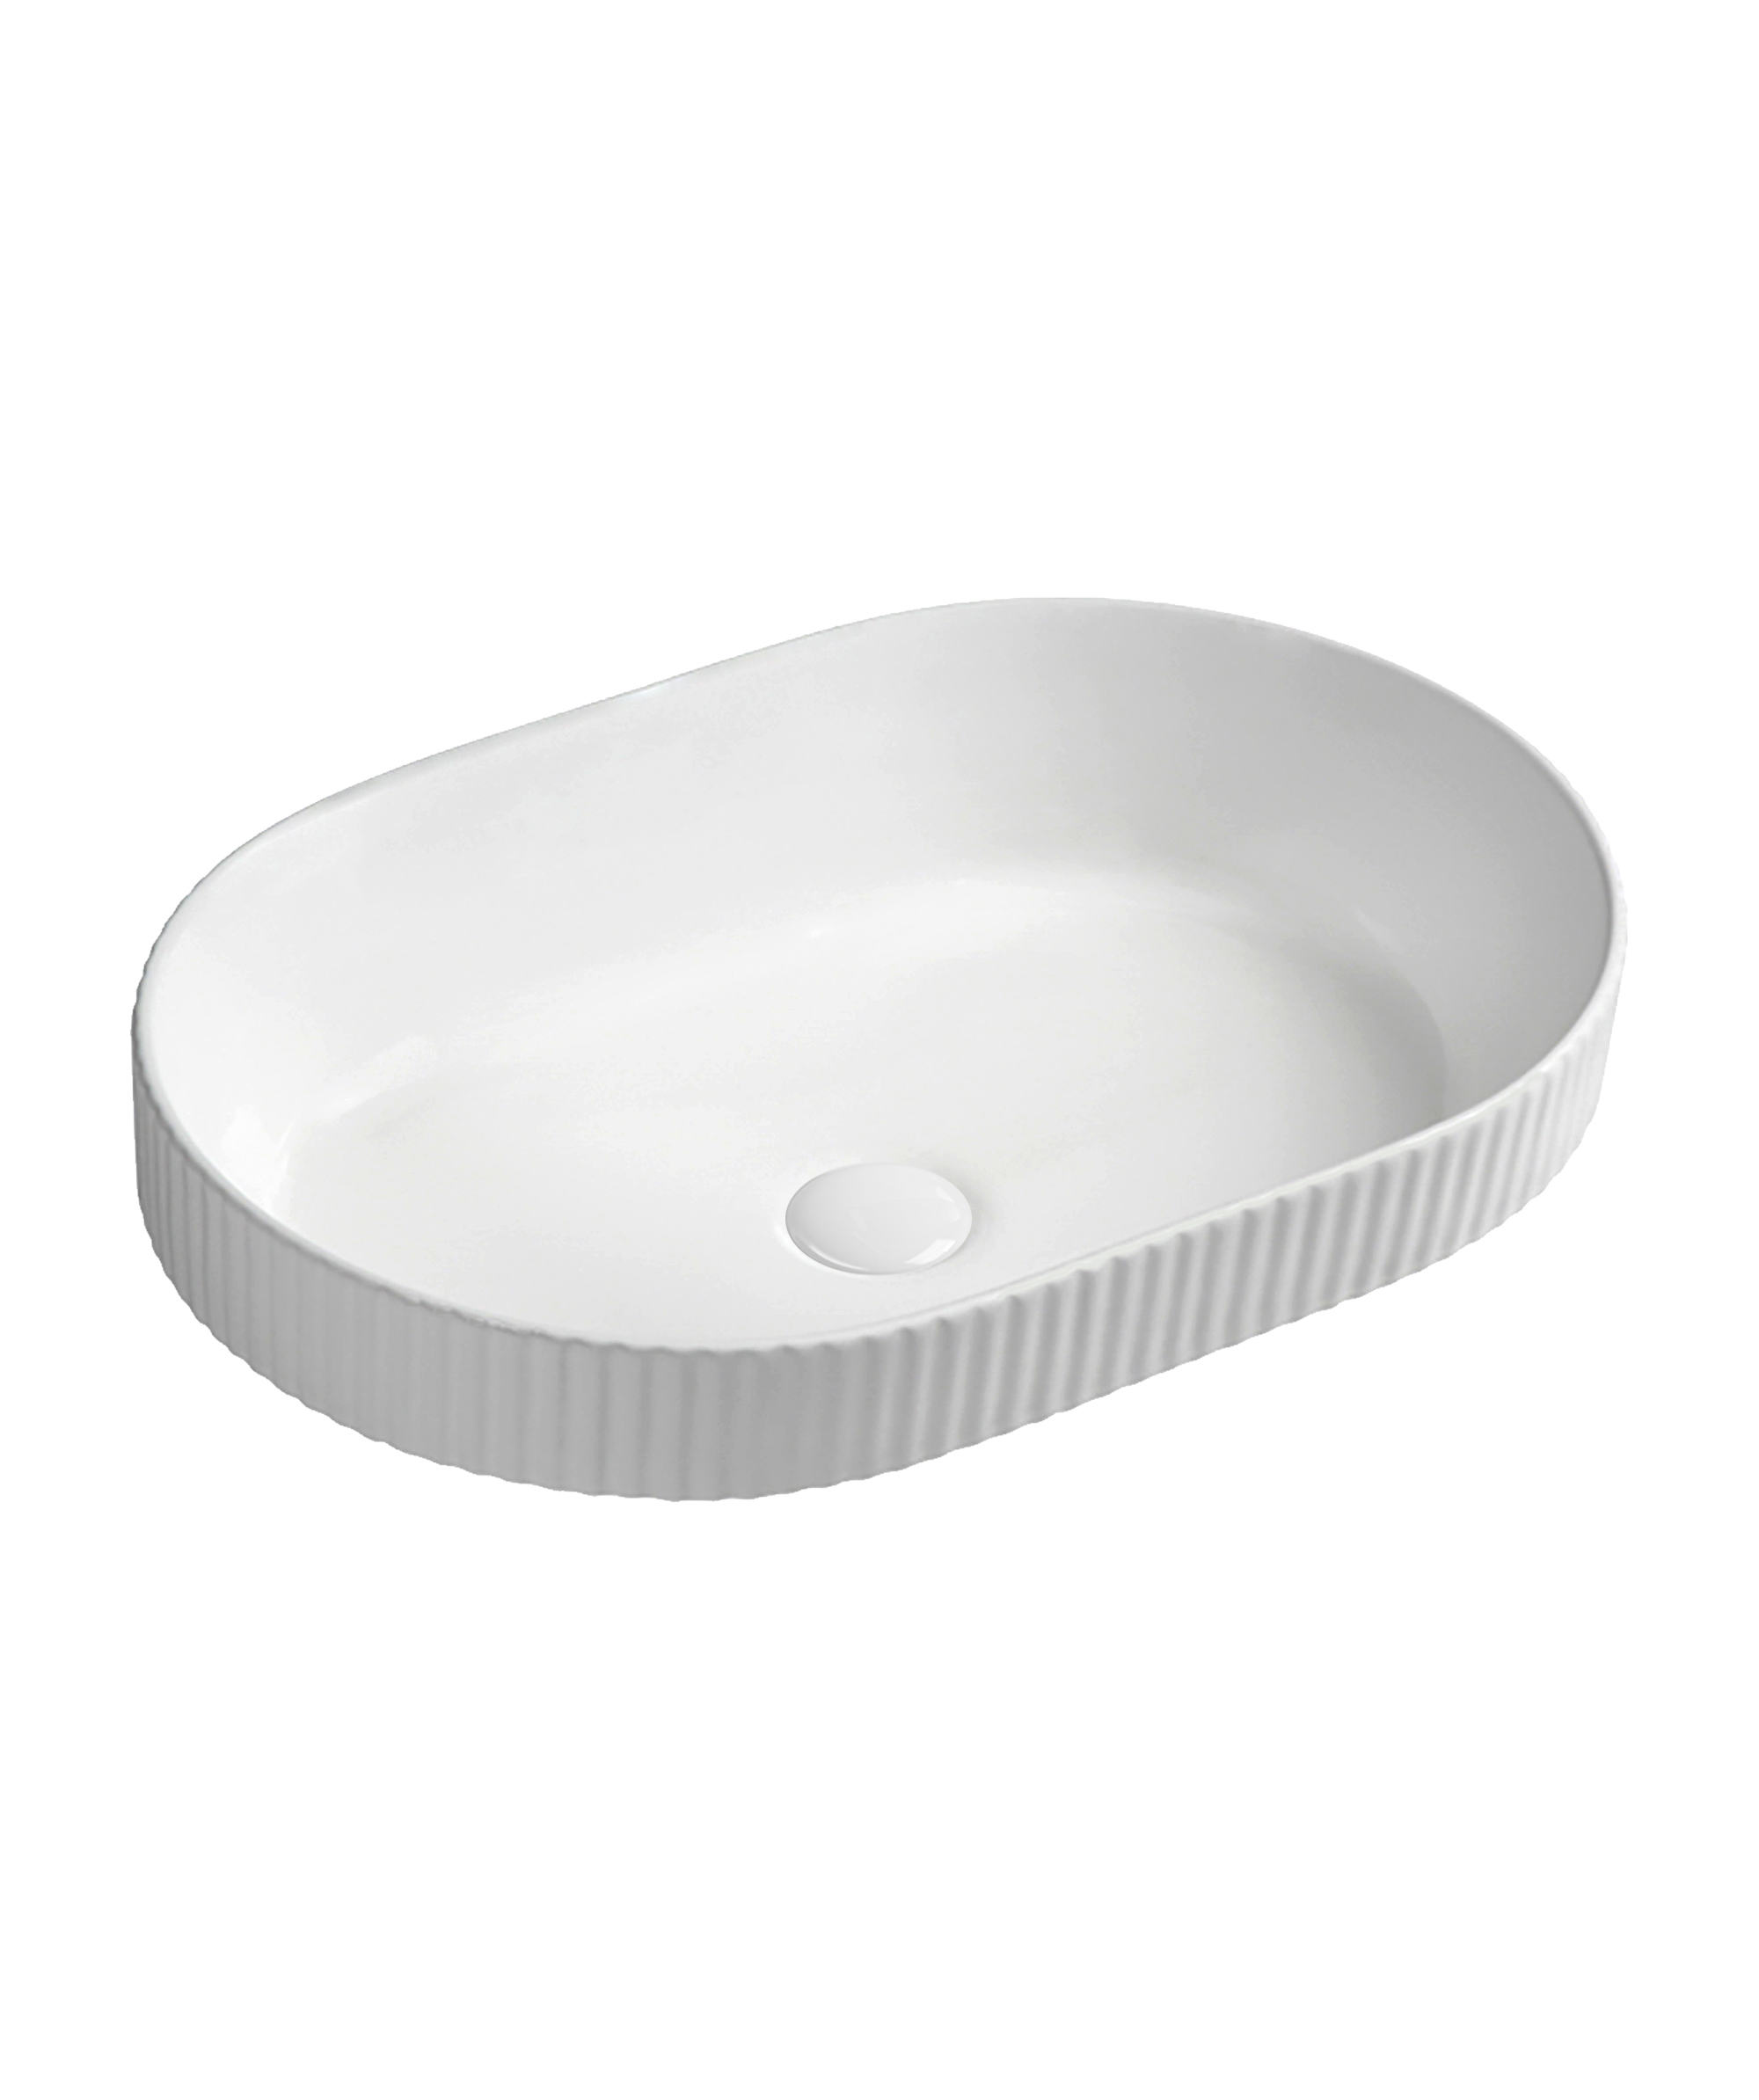 Cleo 550 ceramic basin - White Gloss